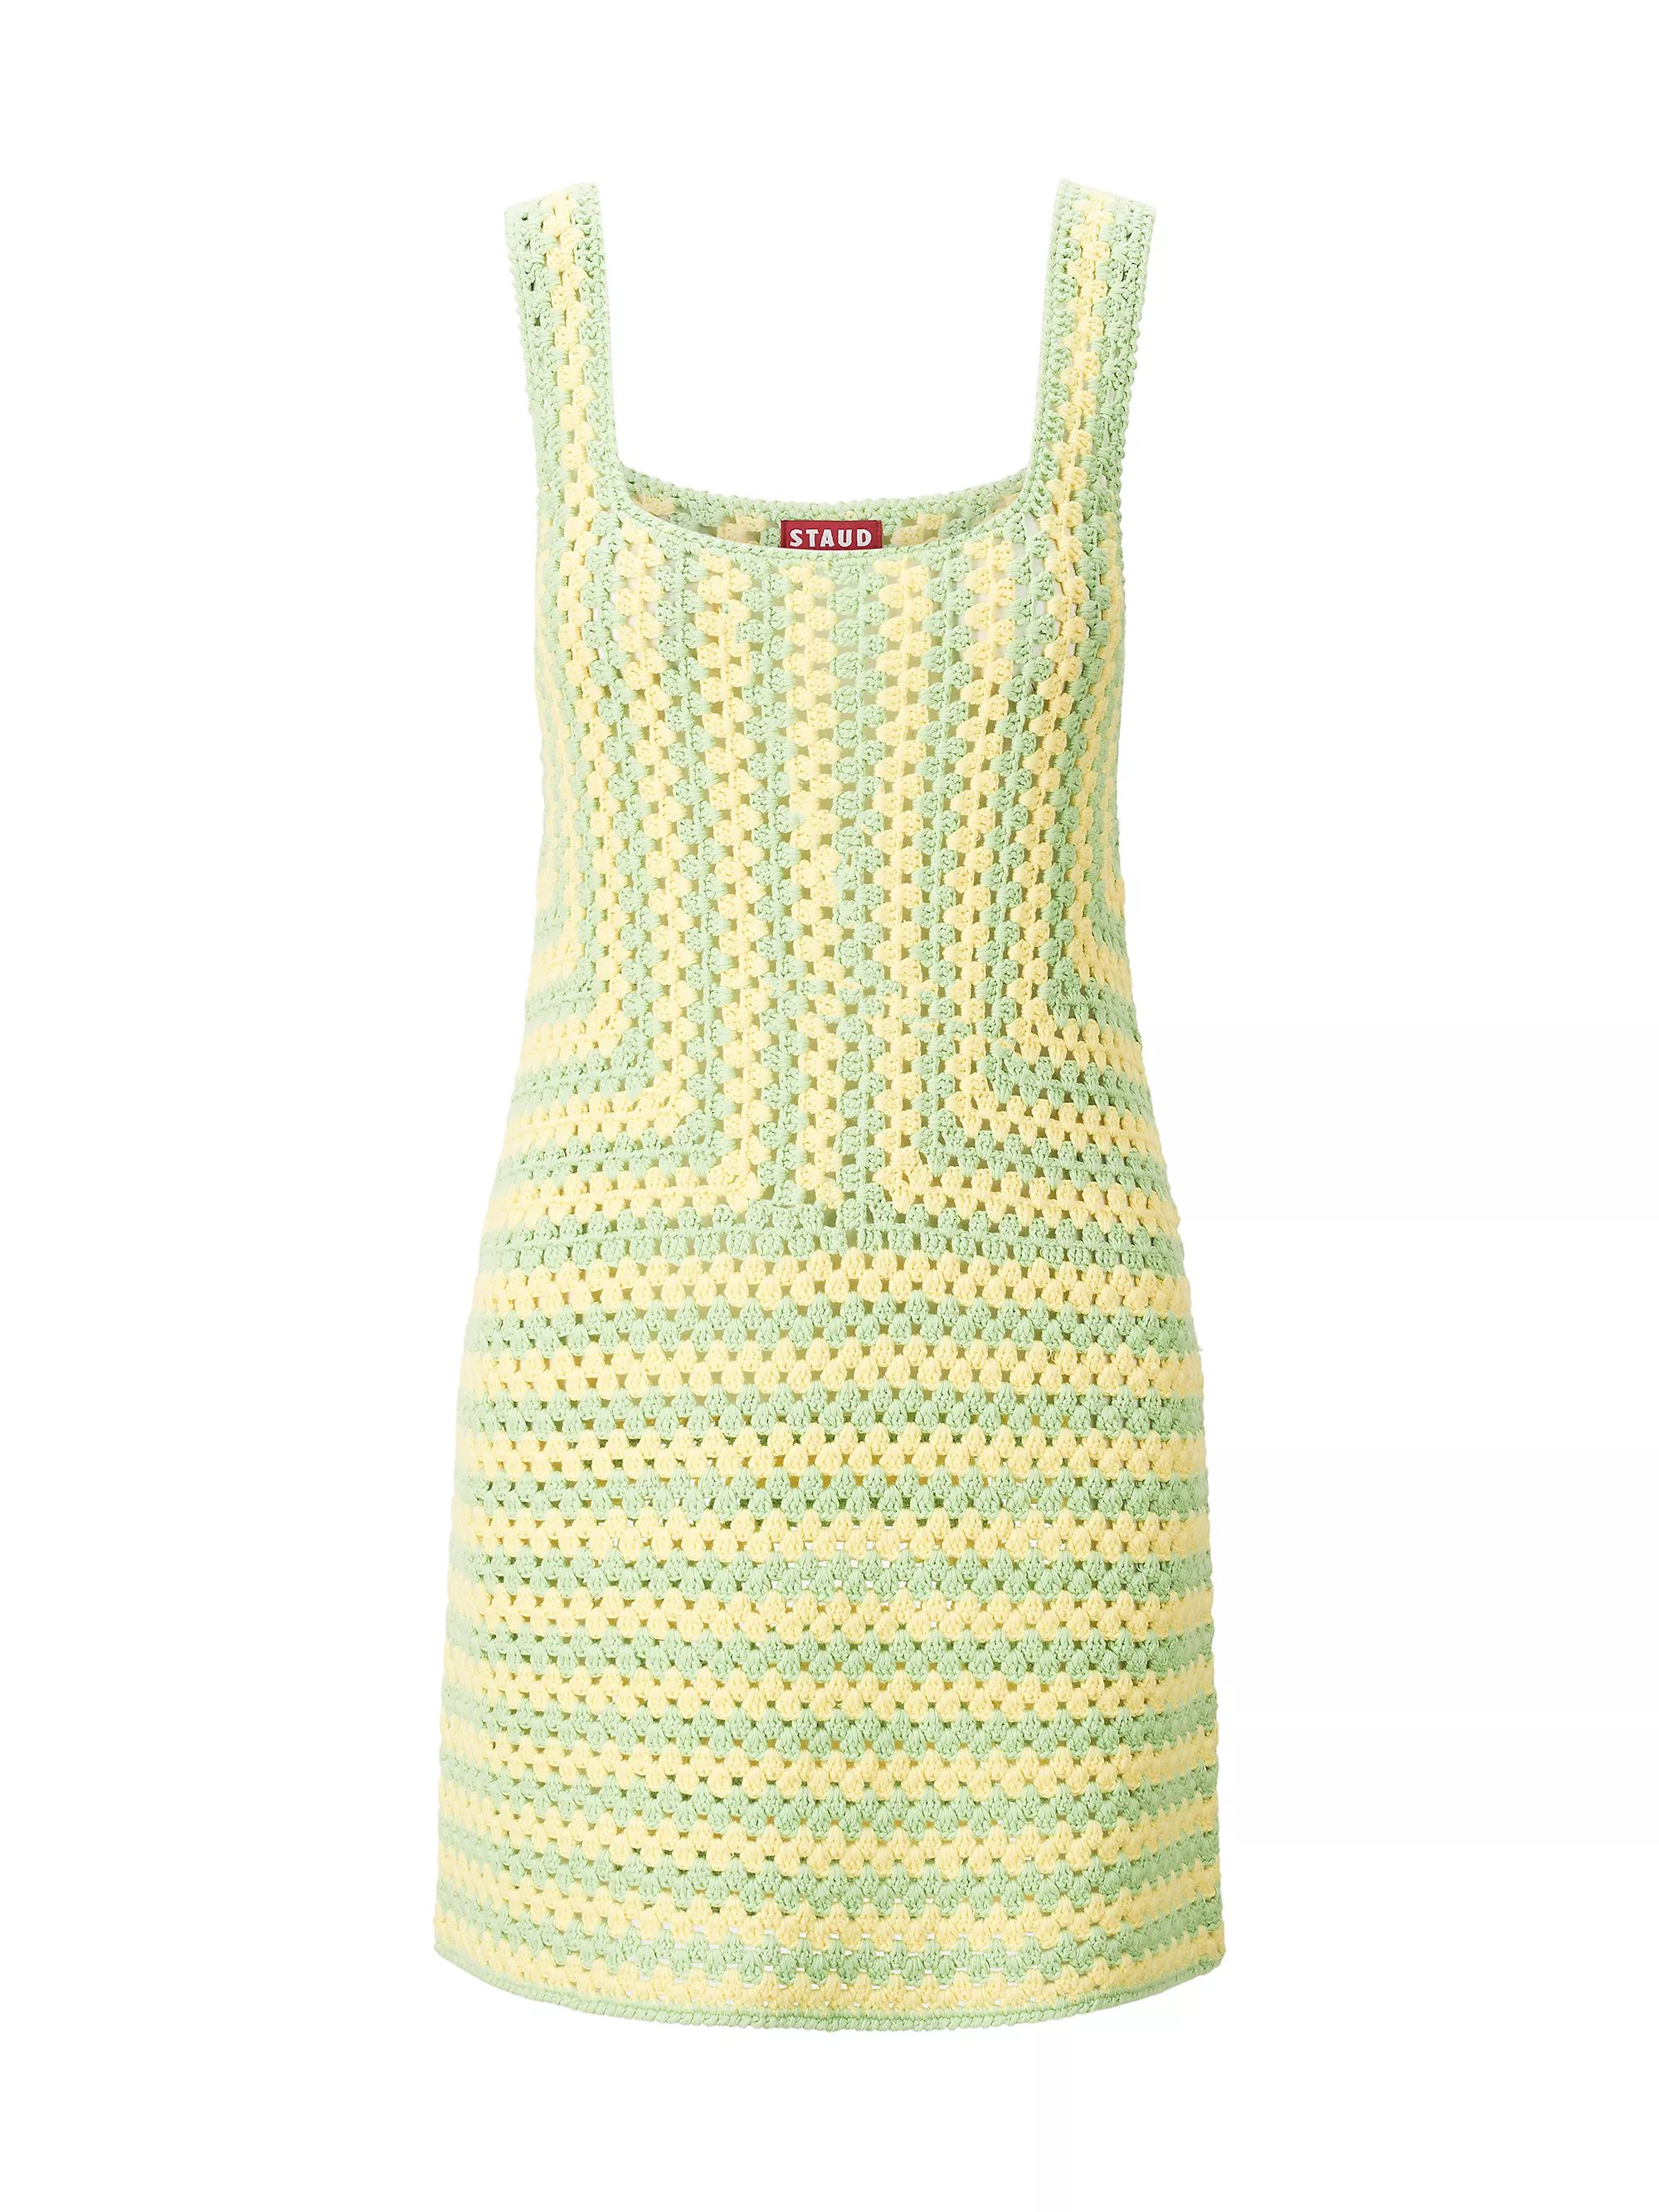 Lemon Drop Matcha SeashoreAll MiniStaudPsychedelic Crocheted Cotton Minidress$395
            
  ... | Saks Fifth Avenue